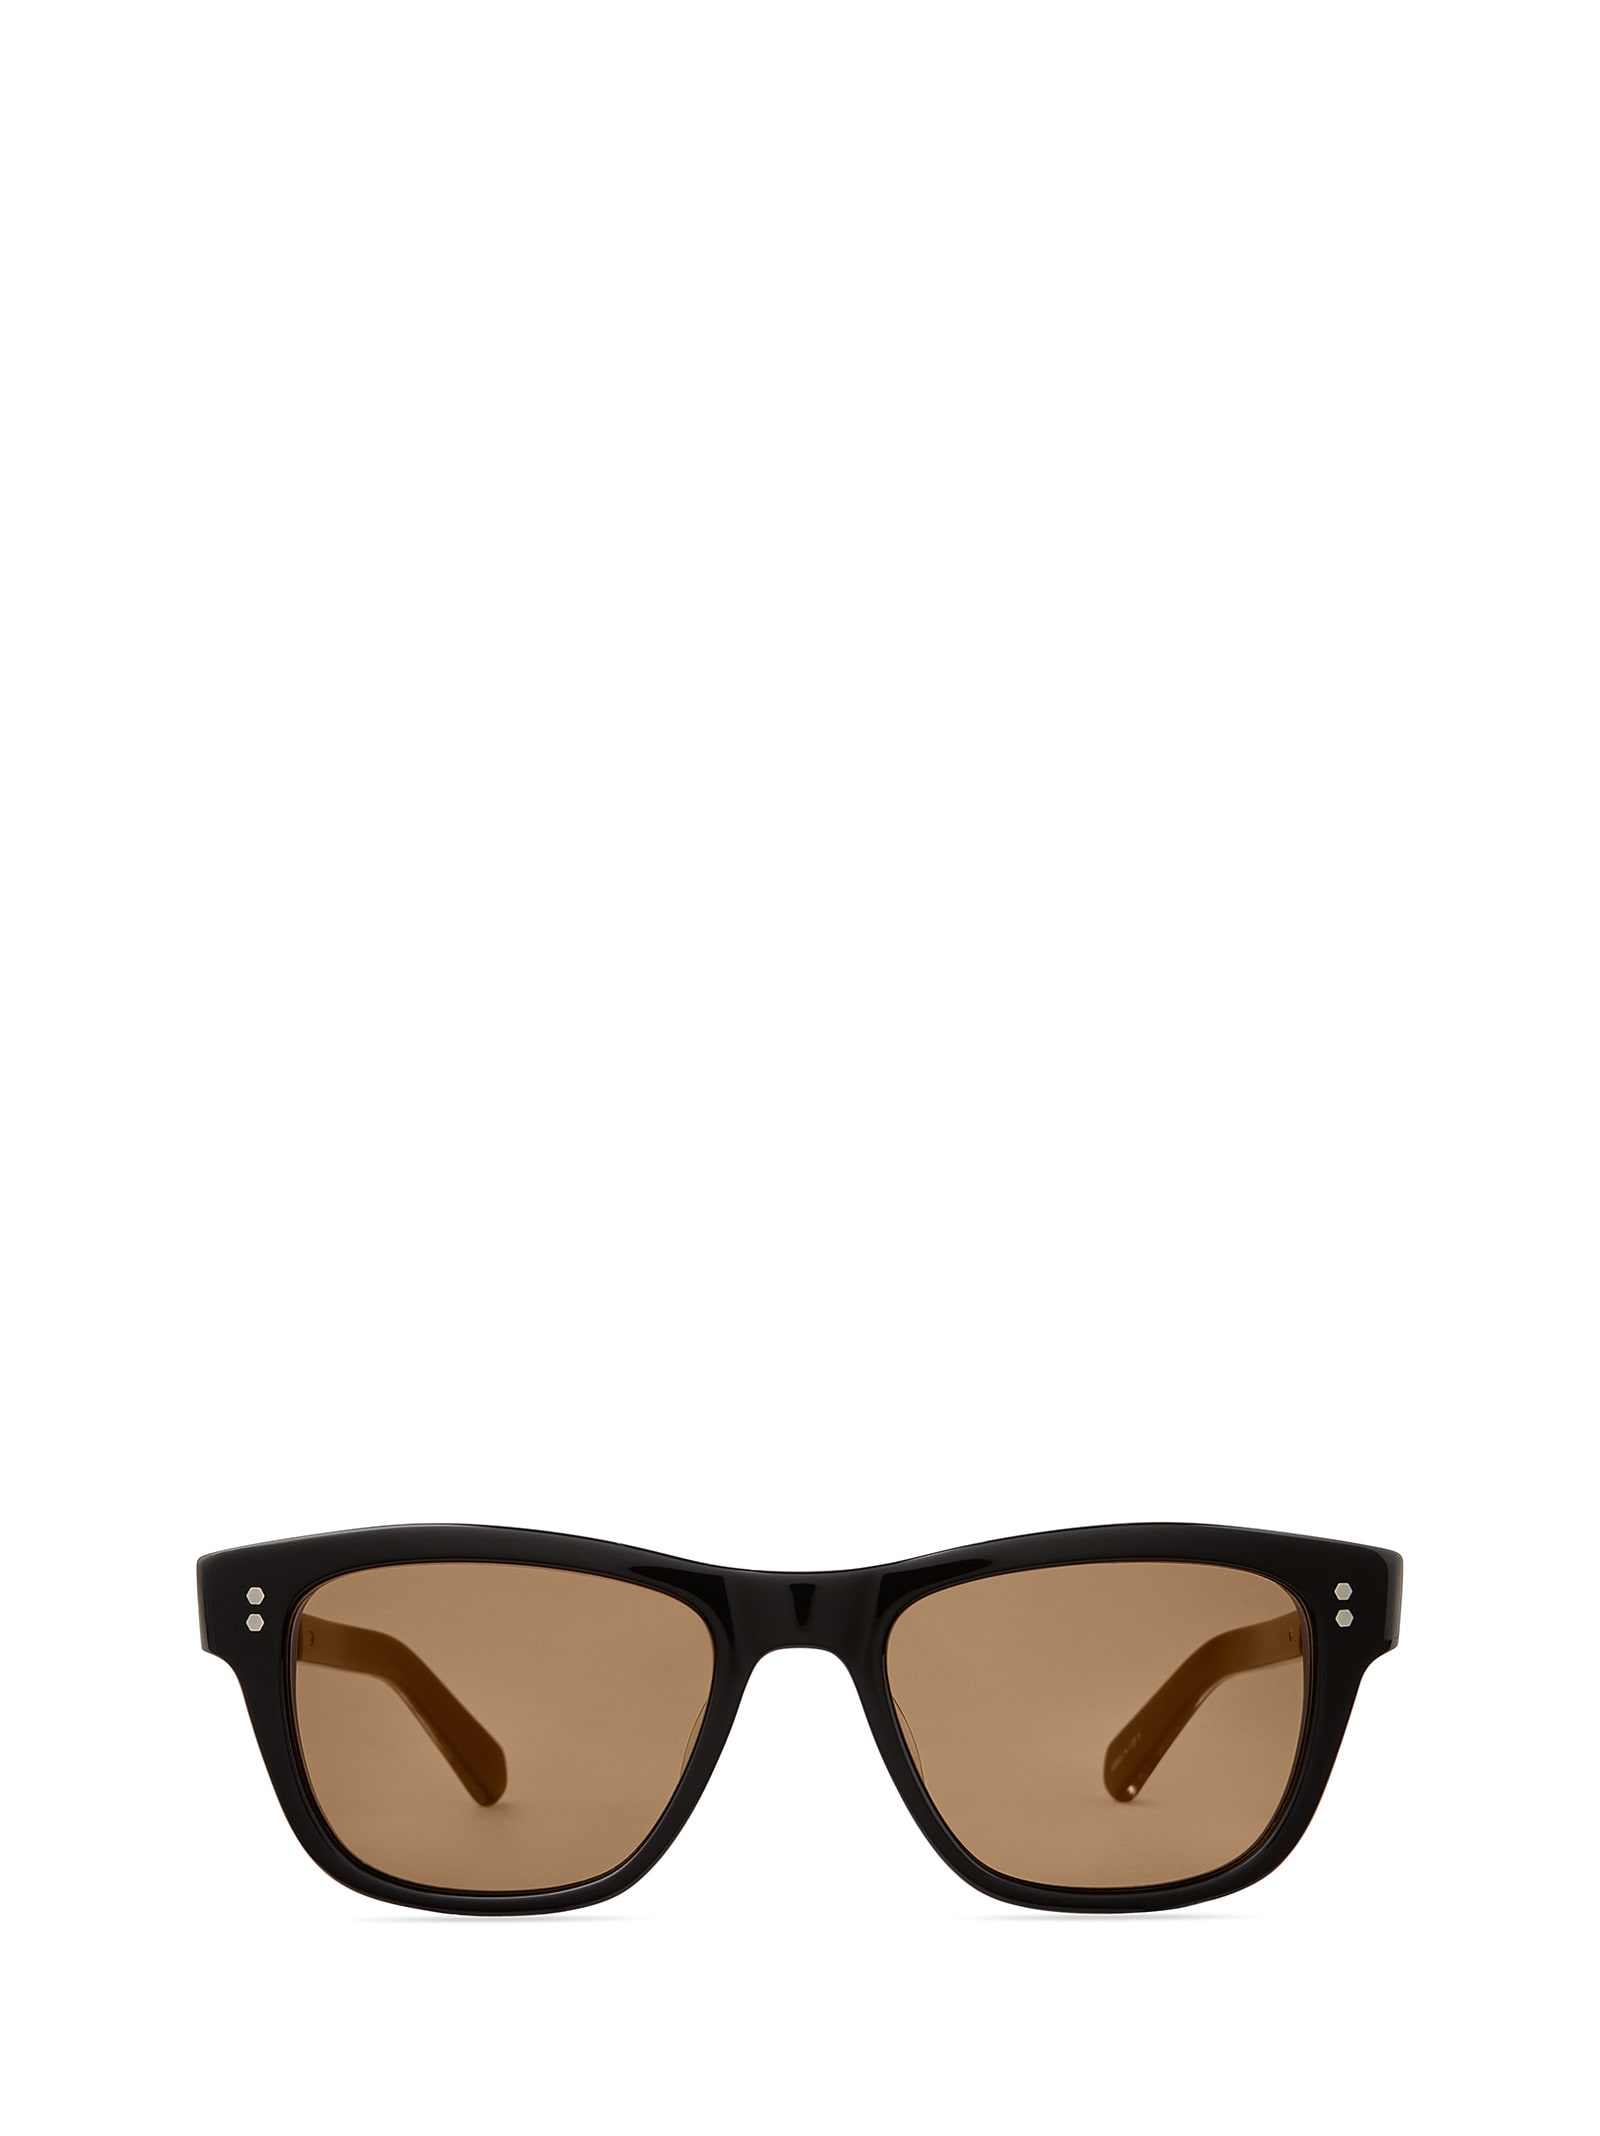 Damone S Black-gunmetal/mojave Brown Polar Sunglasses